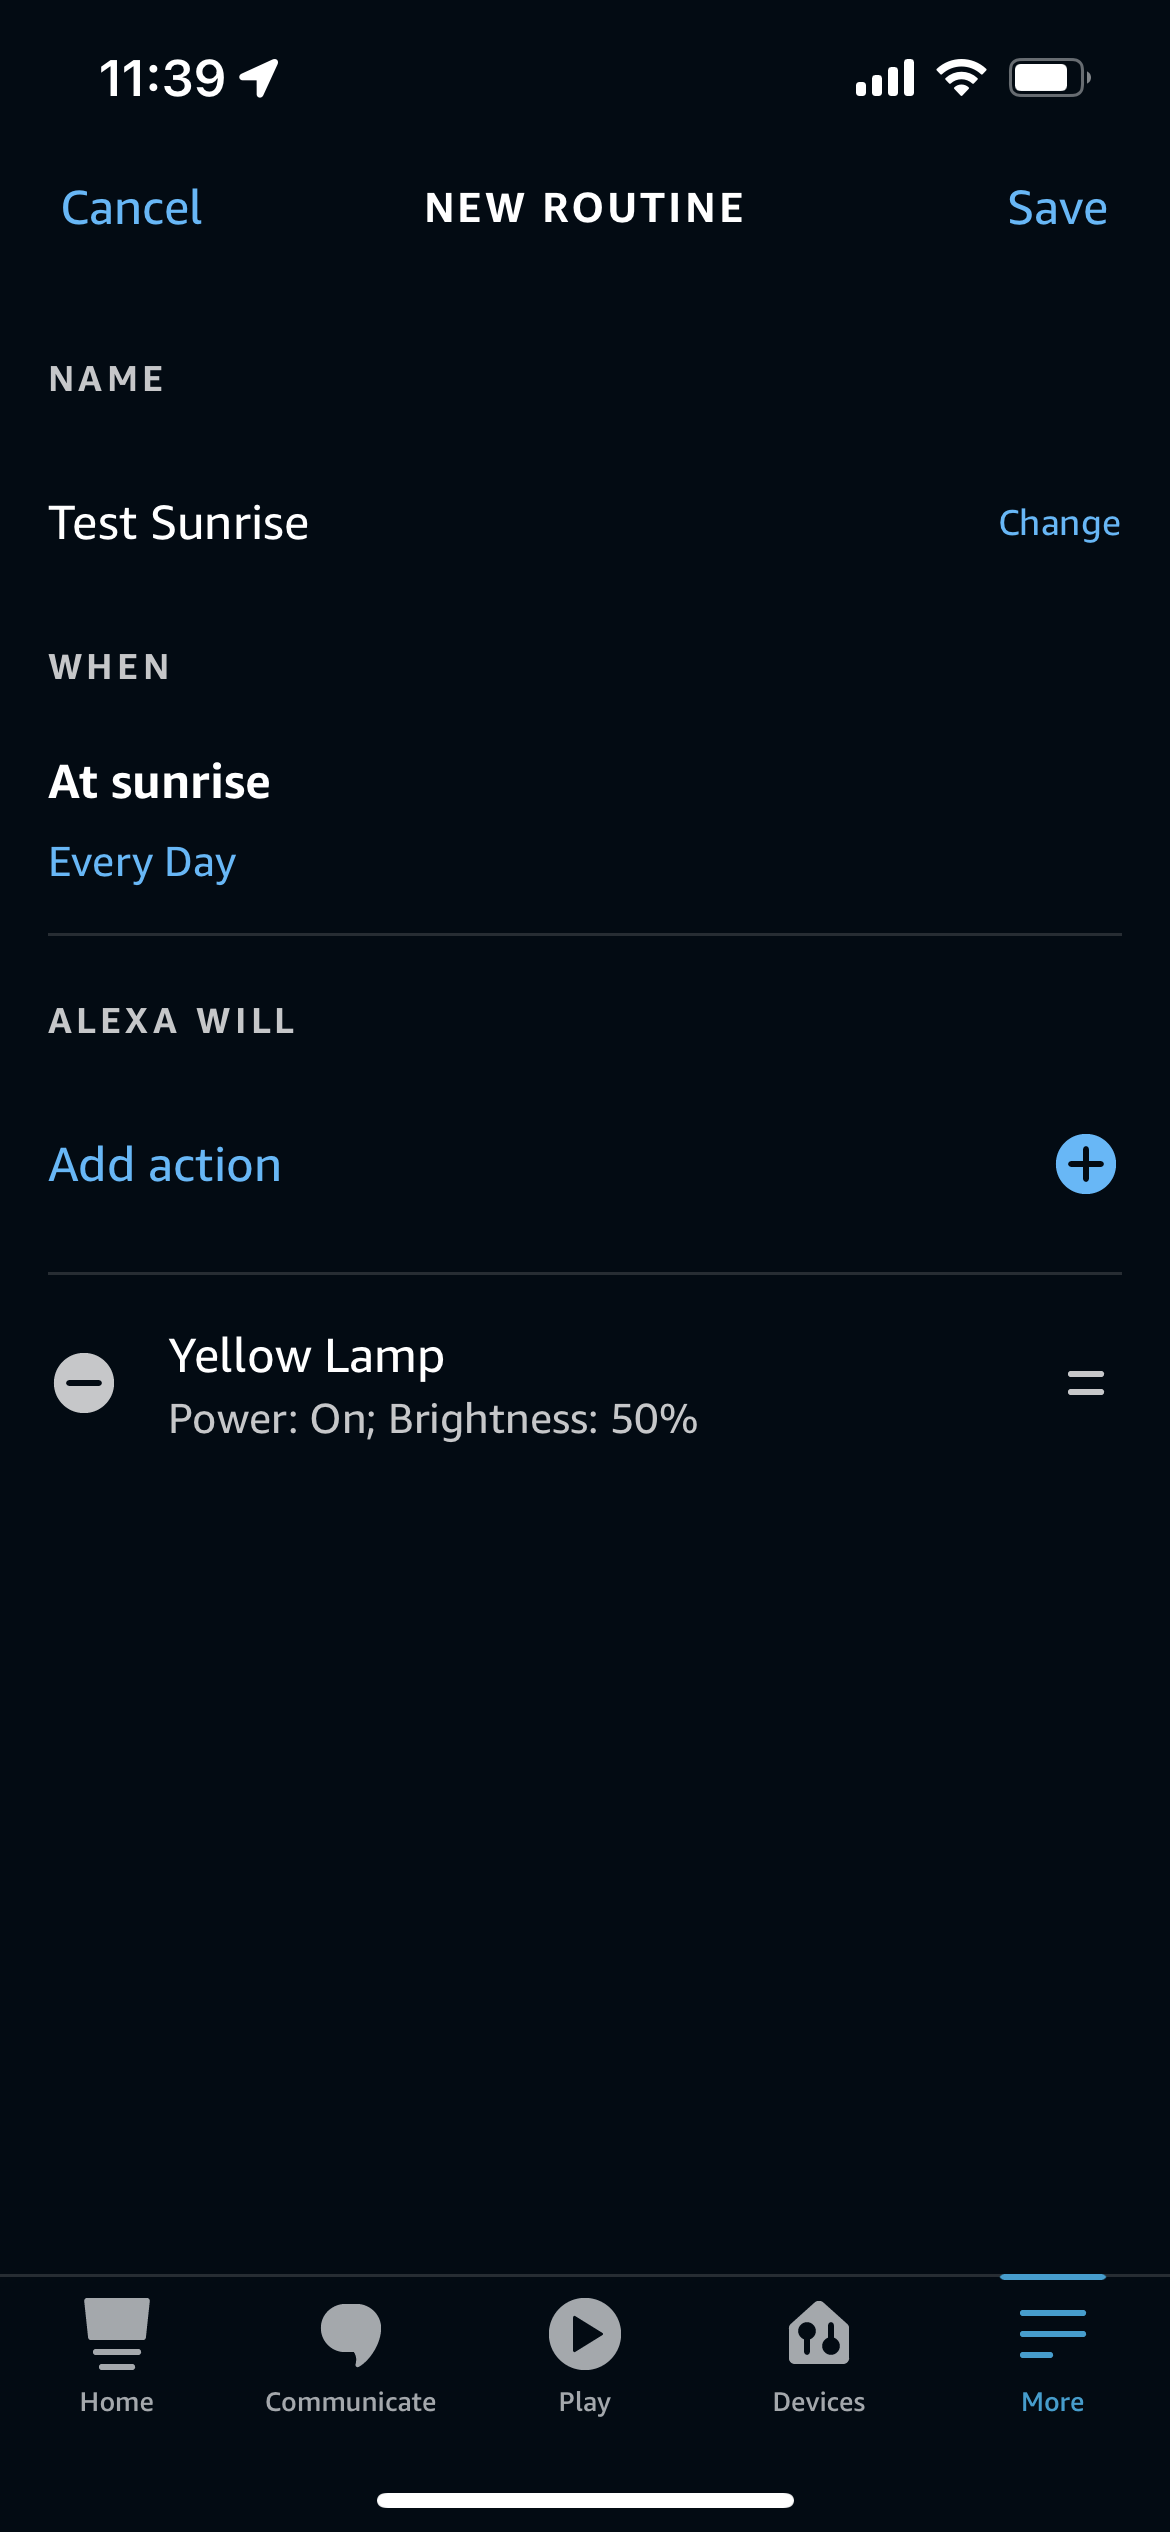 A sunrise routine in the Alexa app